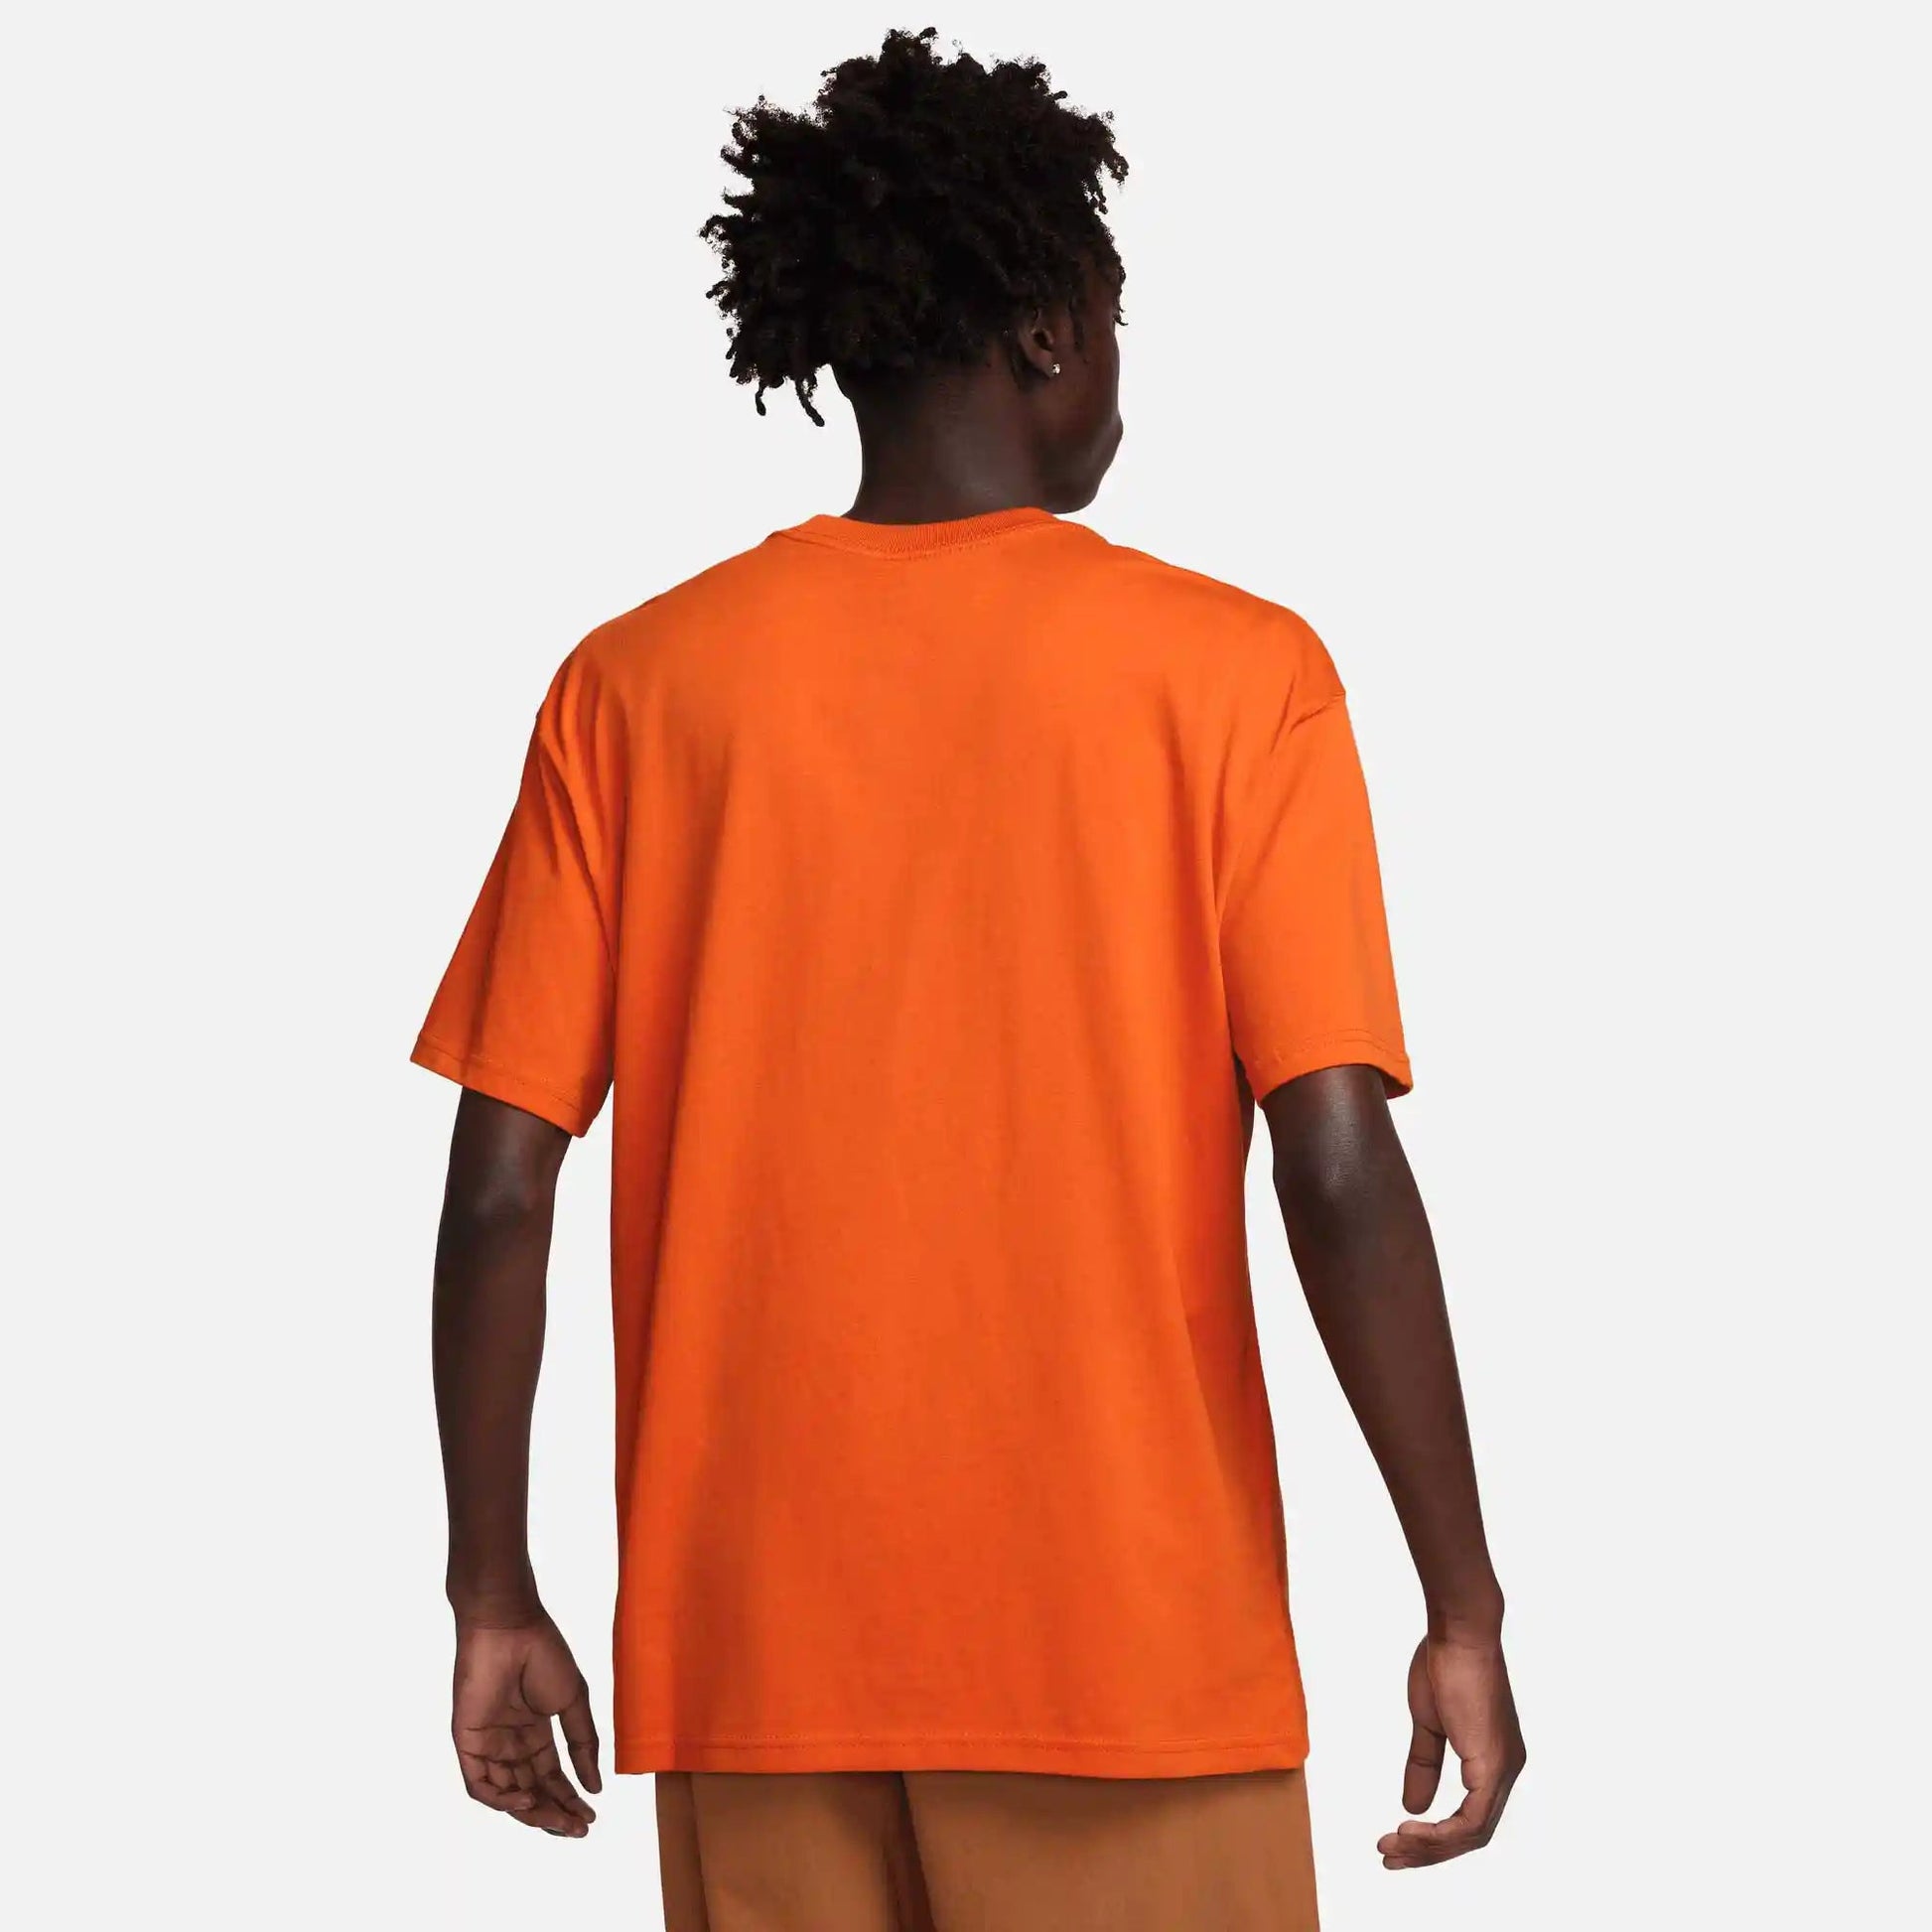 Nike SB Logo Skate T-Shirt, campfire orange - Tiki Room Skateboards - 4